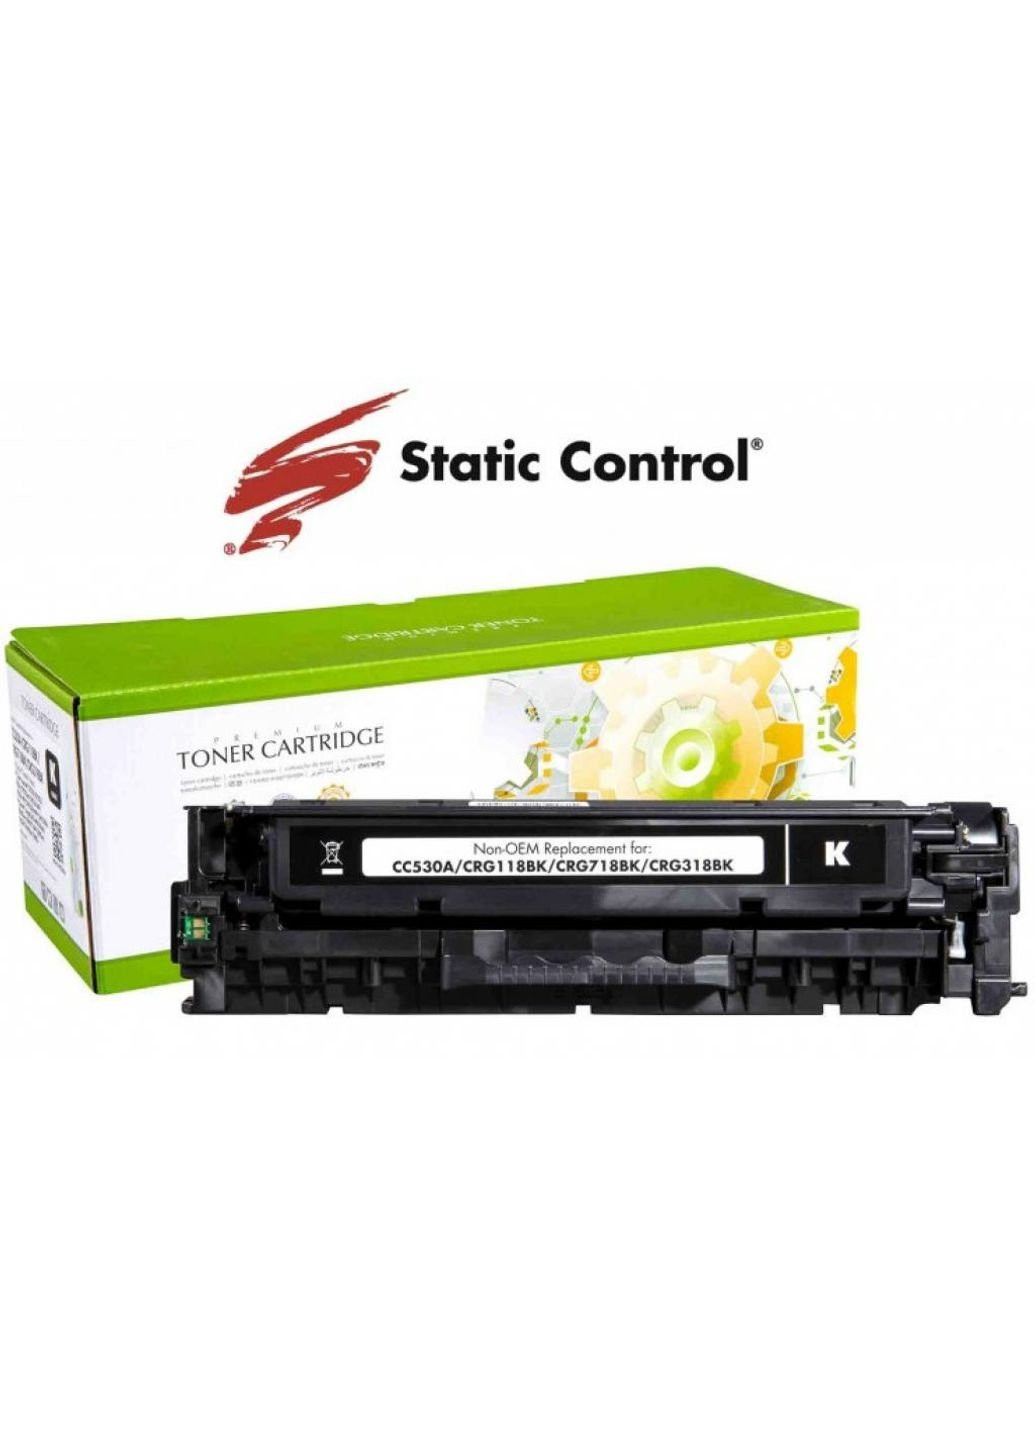 Картридж Static Control (002-01-RC530A) Vinga hp clj cc530a (304a) 3.5k black (247618565)